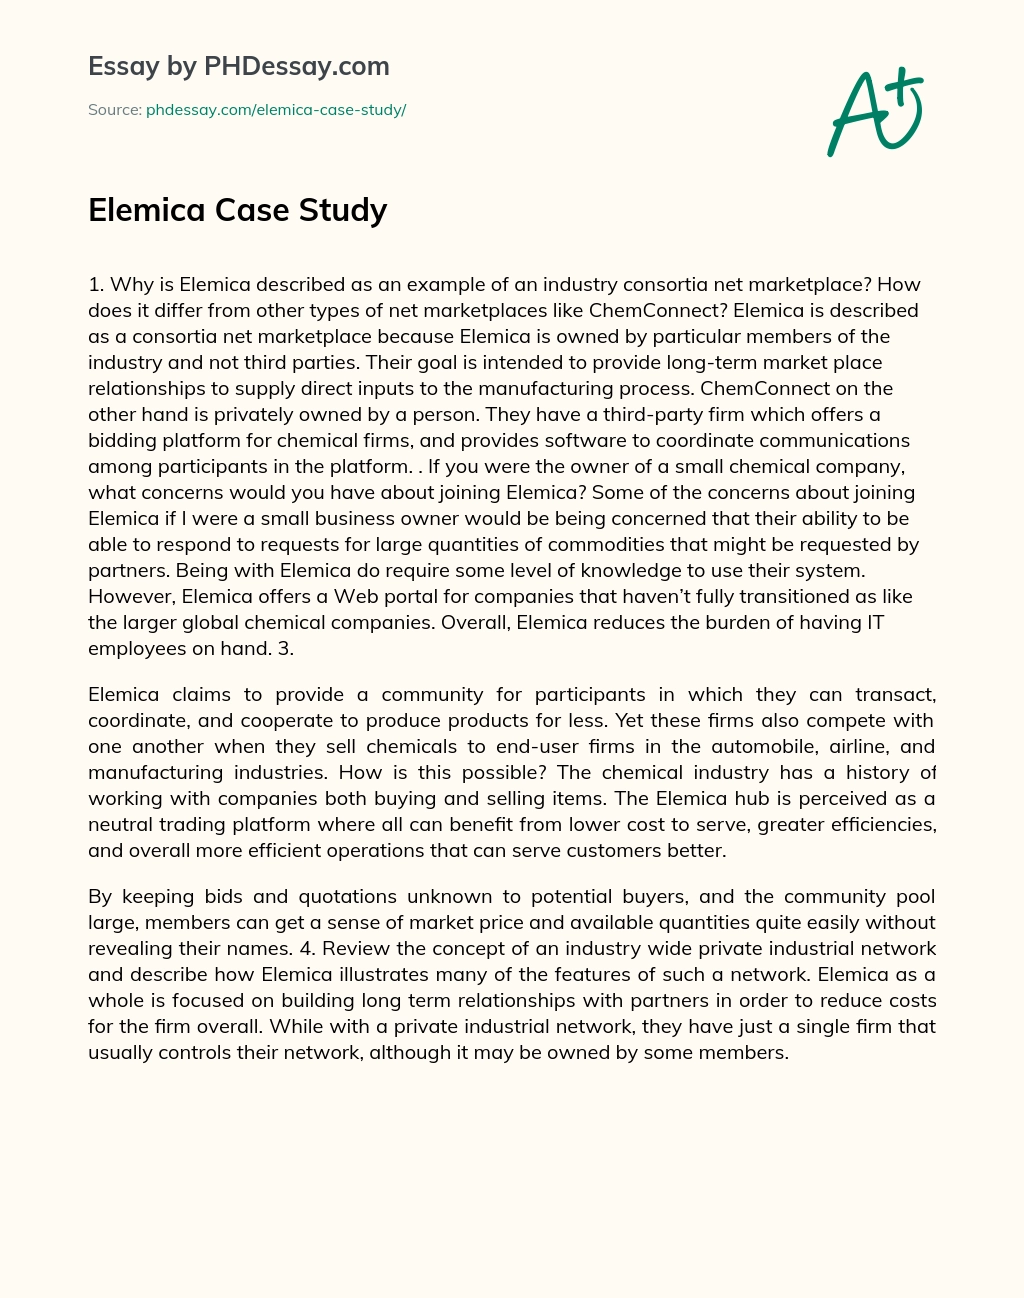 Elemica Case Study essay